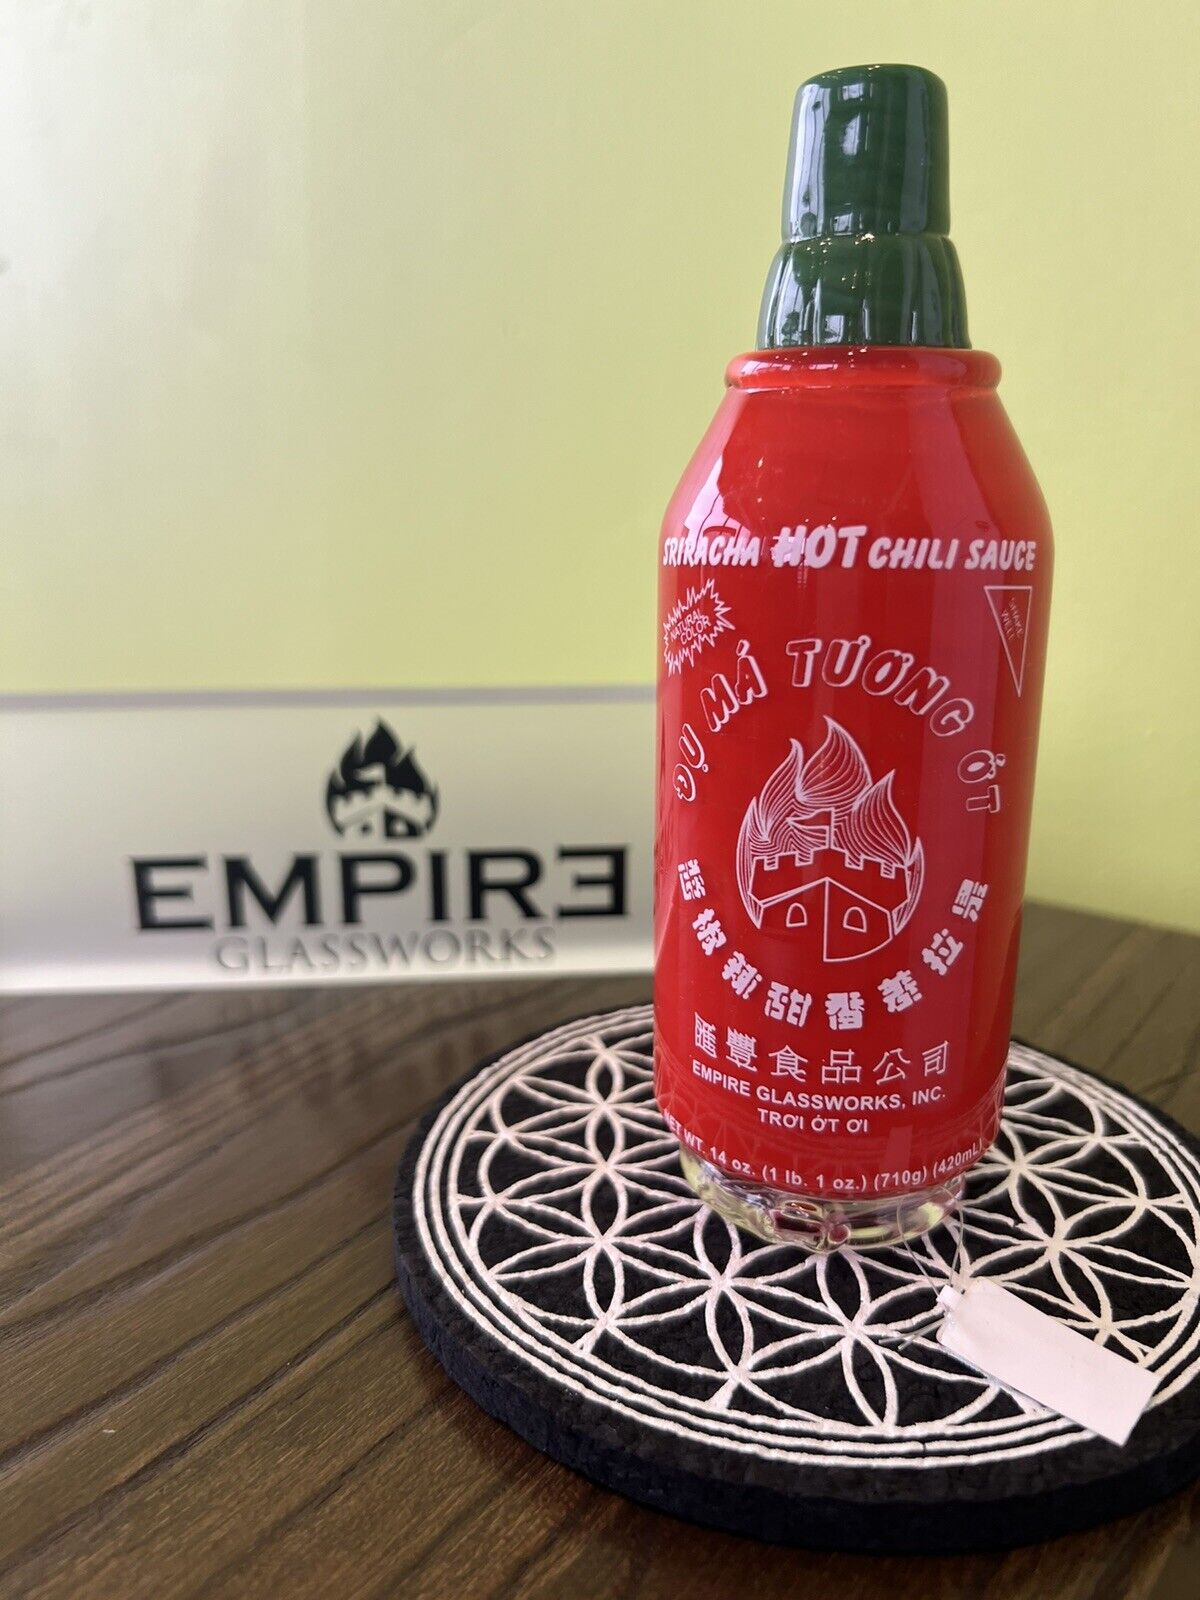 Empire Glassworks Peak Top Sriracha Bottle Glass Attachment